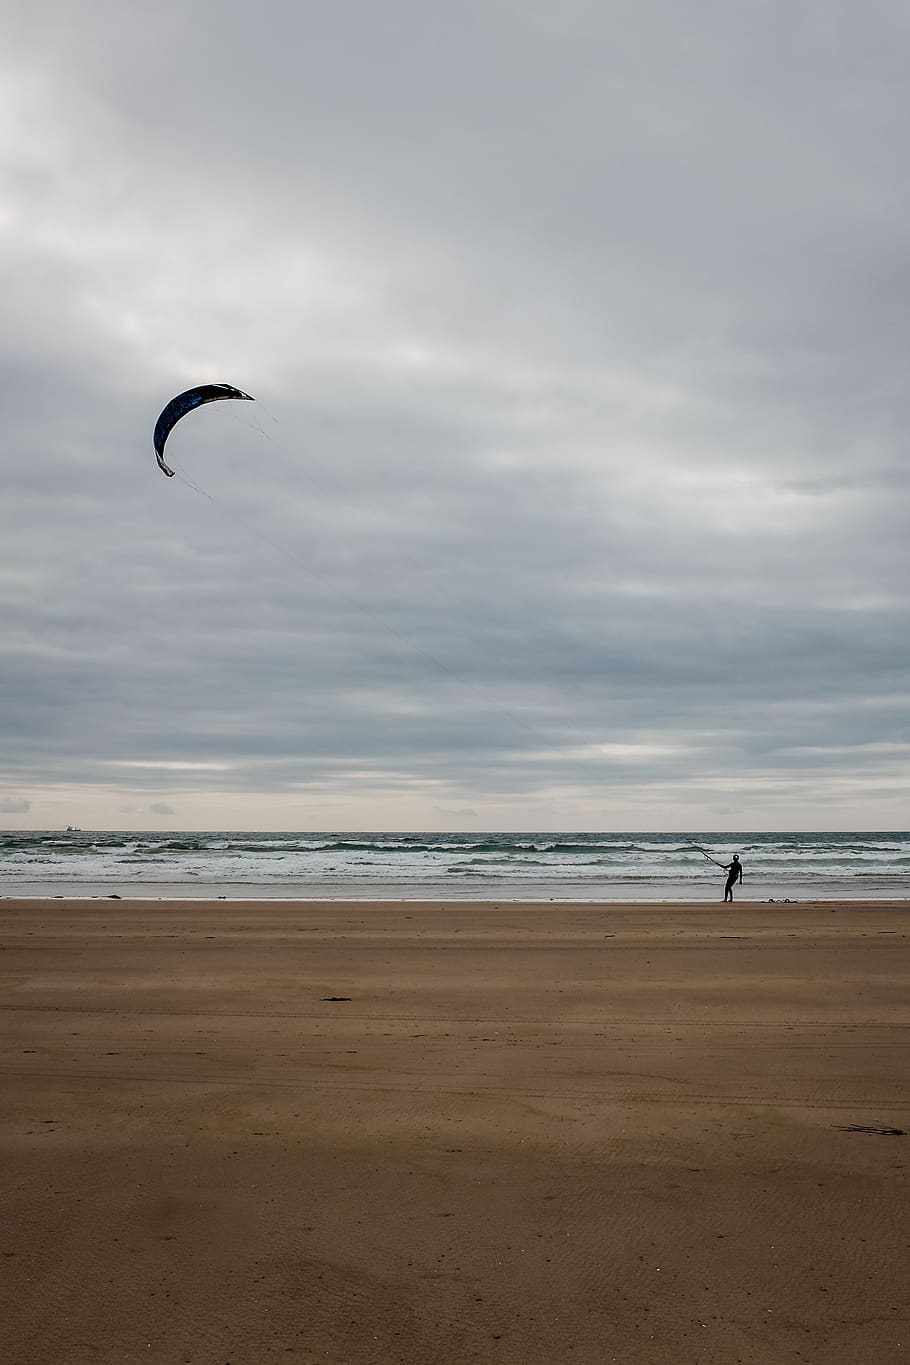 kitesurfing, kitesurfer, wales, beach, sea, cliffs, pembrokershire